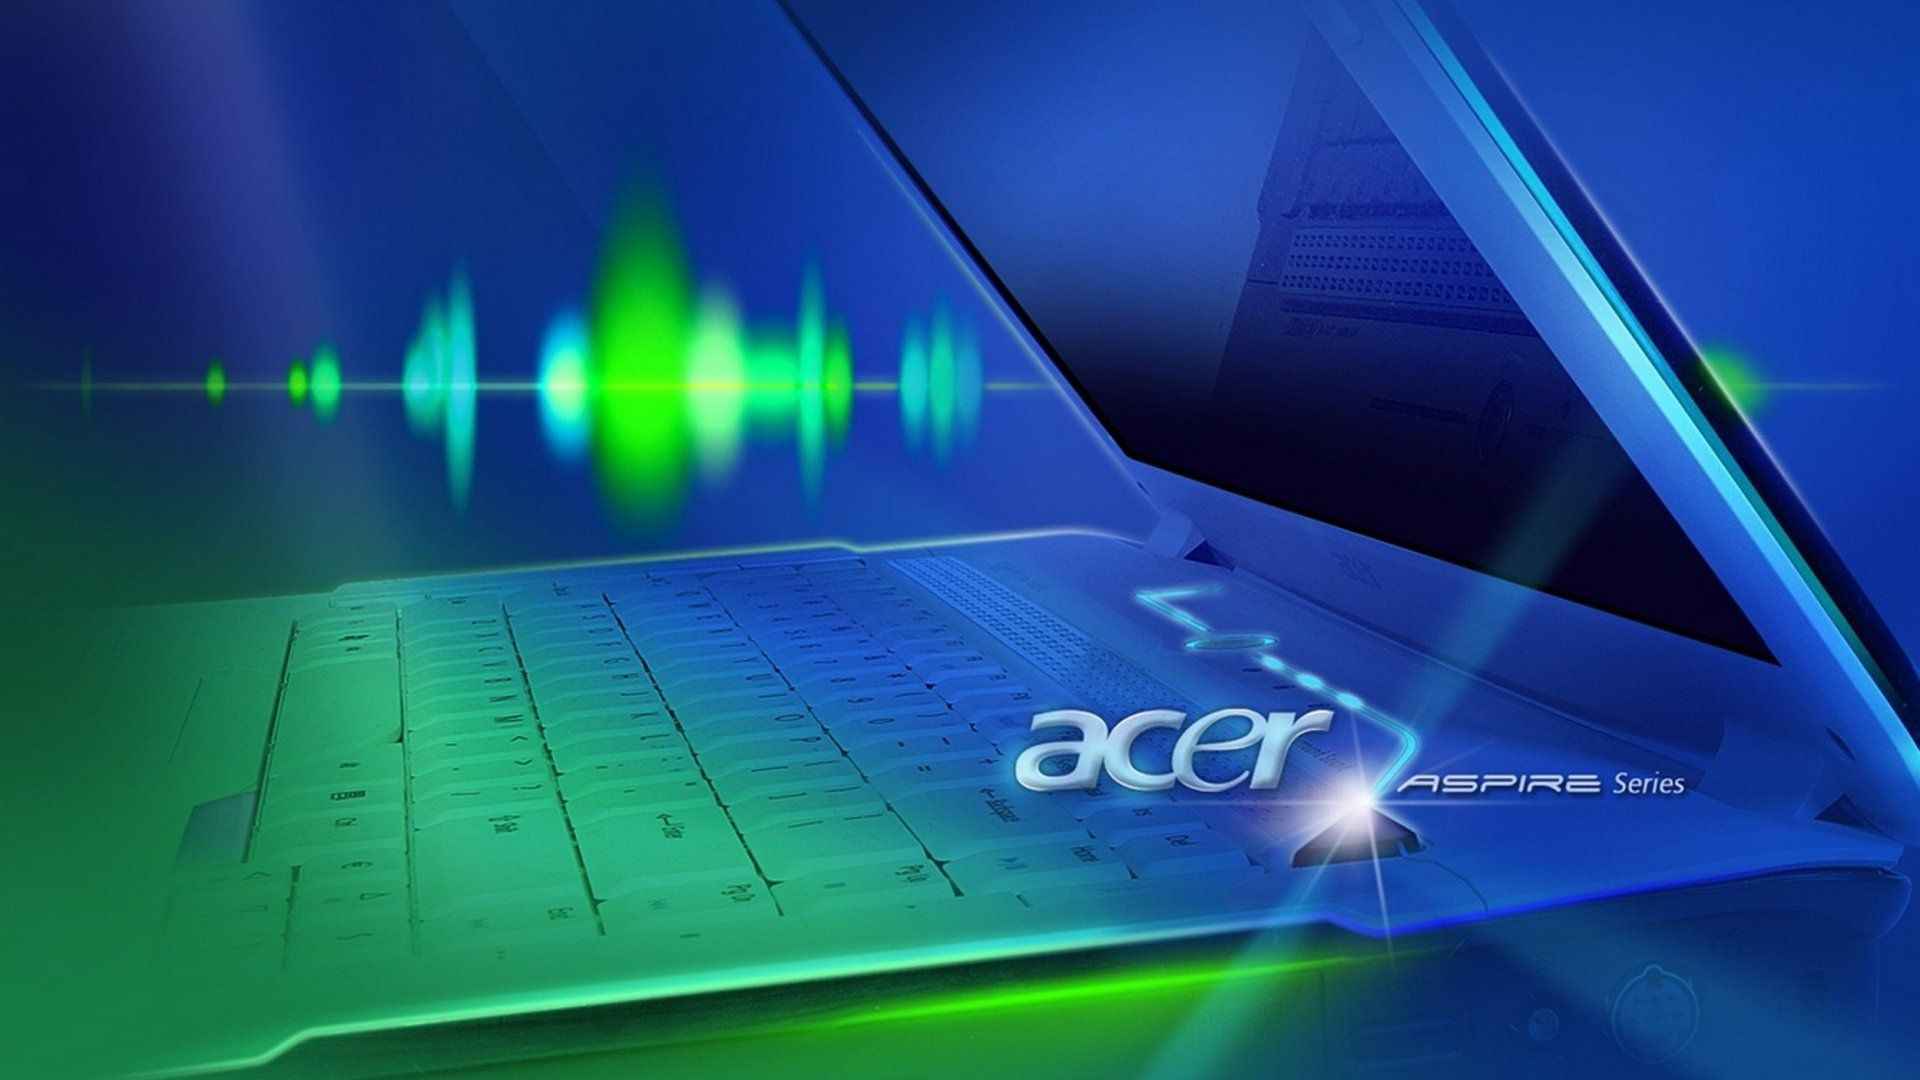 Acer Logo 